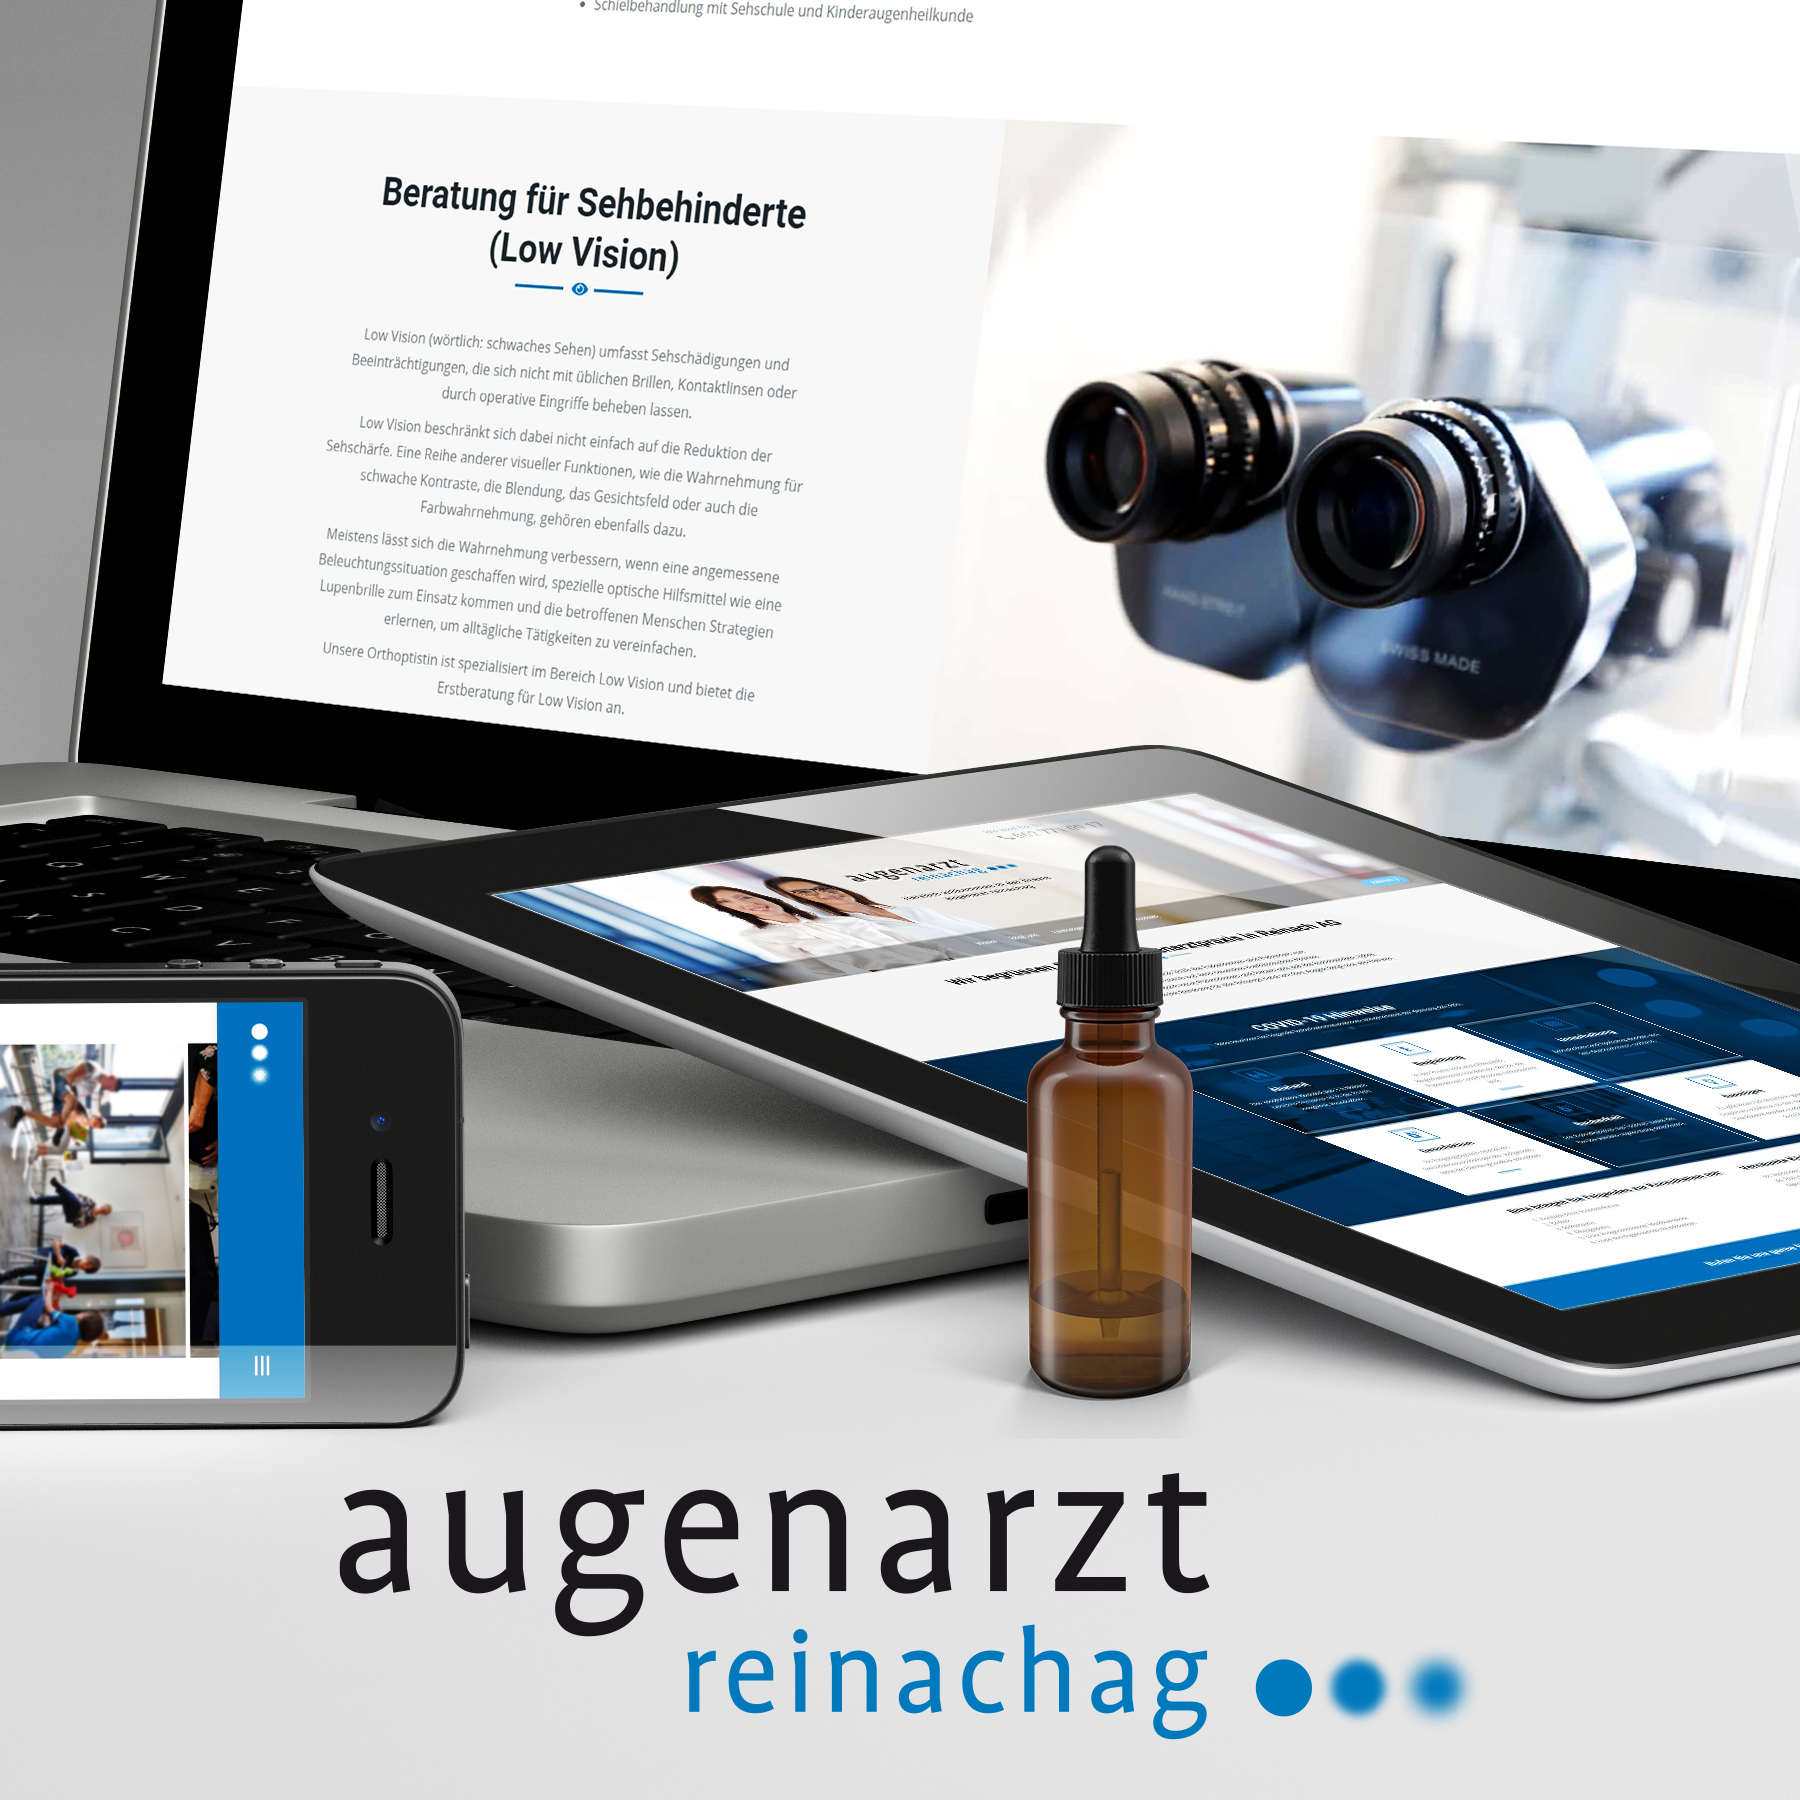 Augenarzt Reinachag - Grafikdesign - Sebastian Wiessner - Werbeagentur Aachen